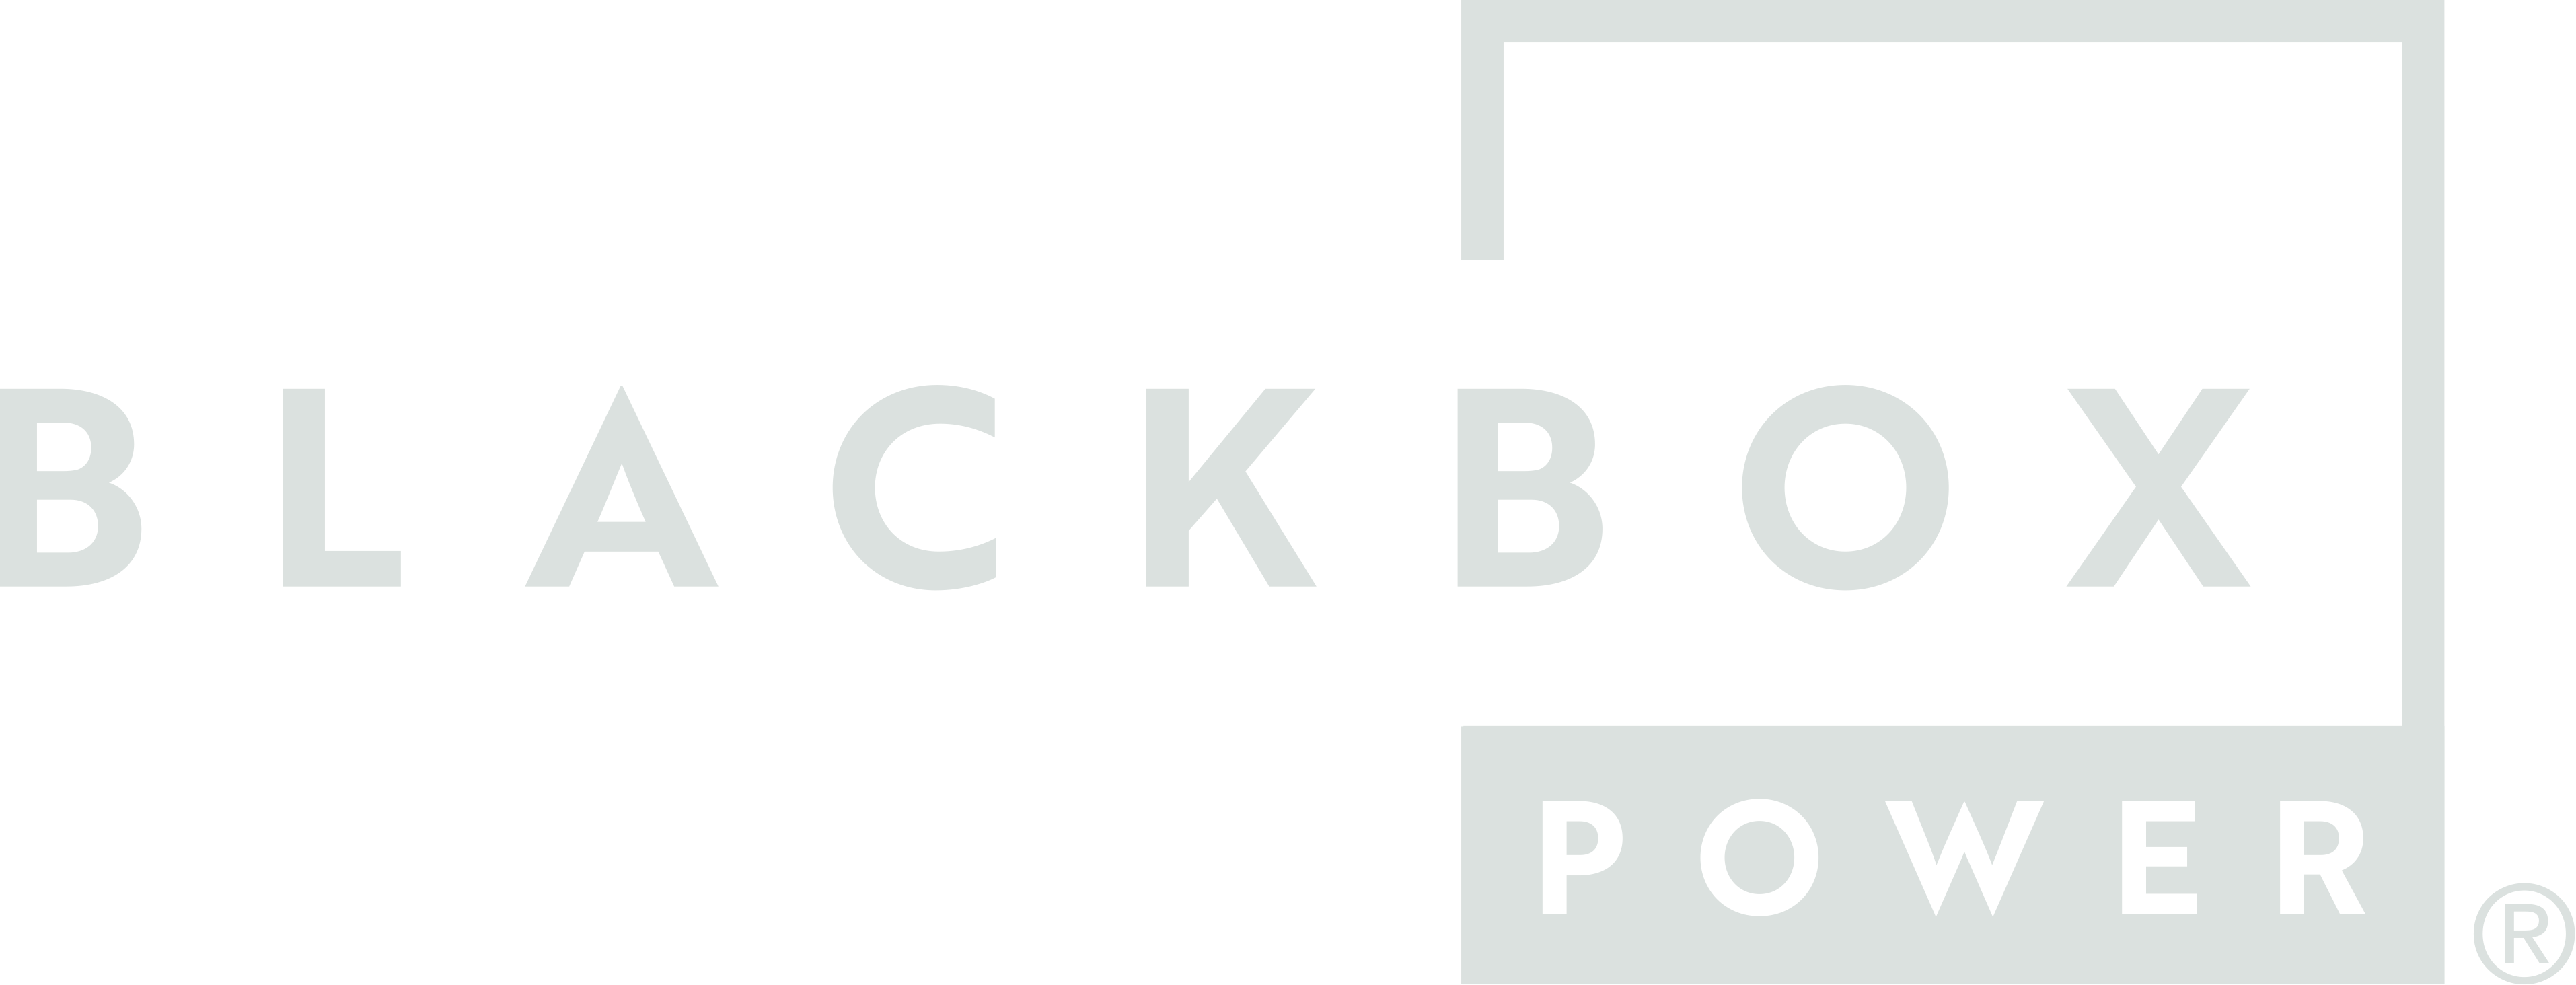 black box power logo footer